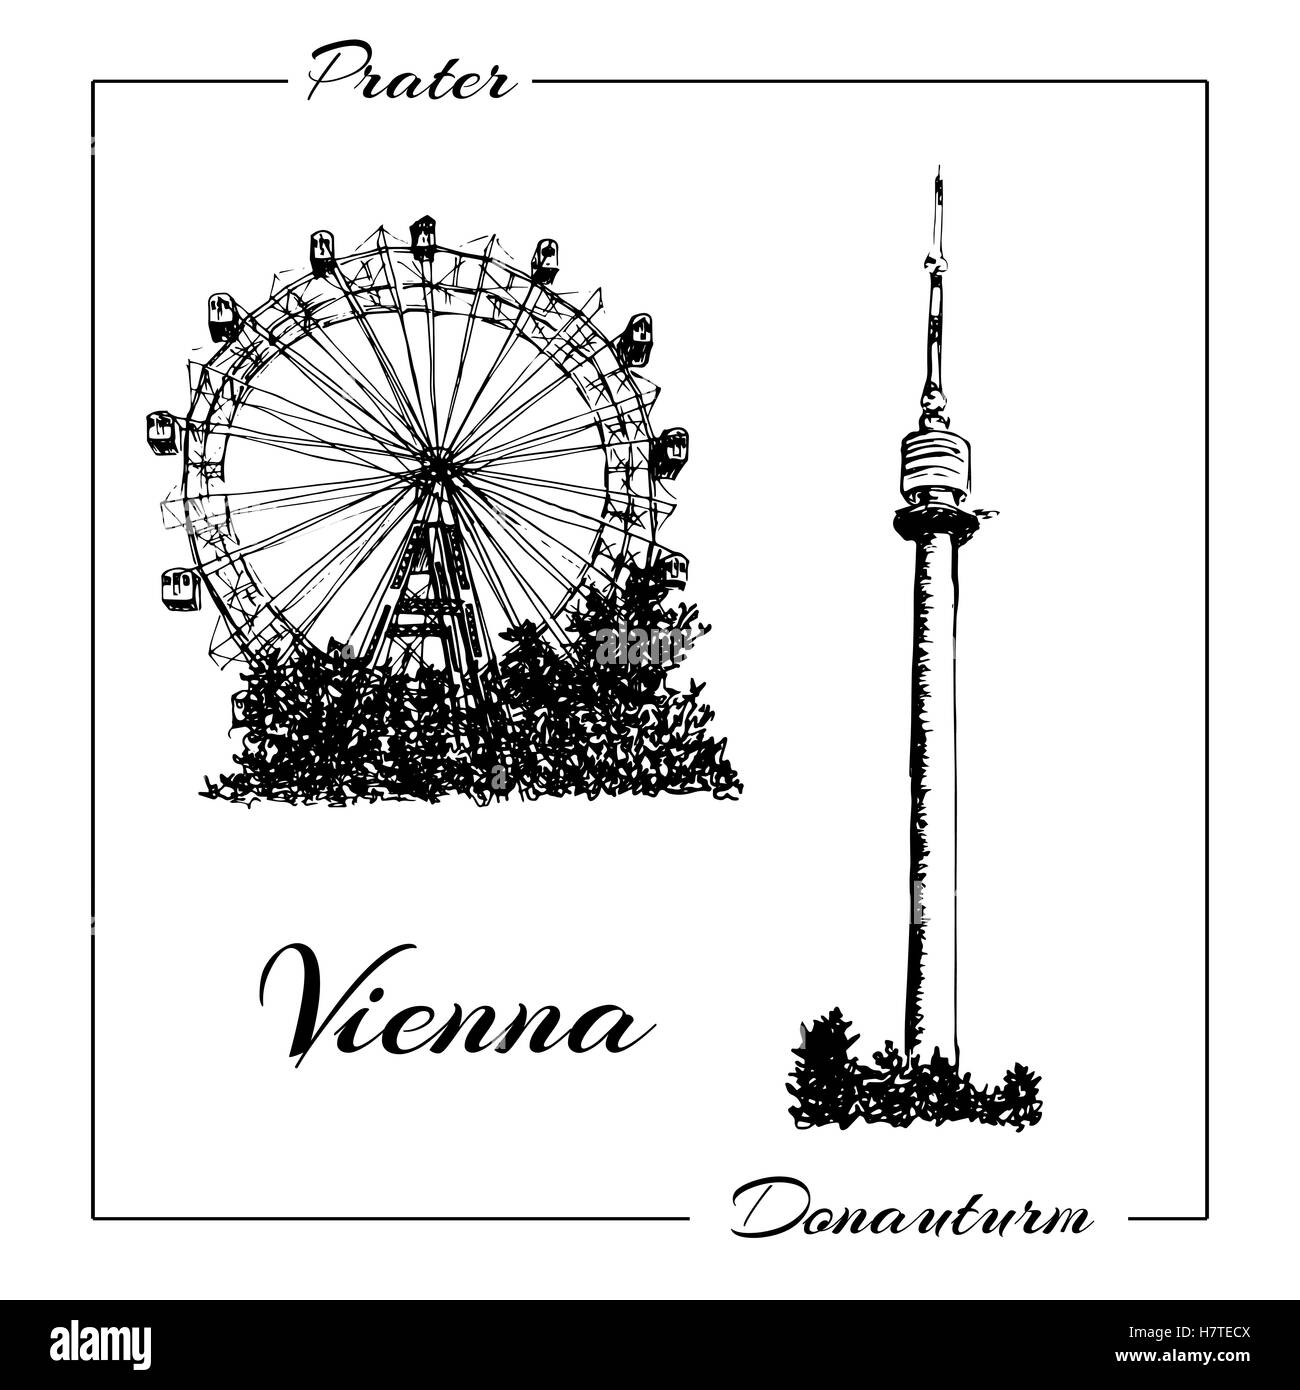 Wiener Prater und Donauturm. Stock Vektor